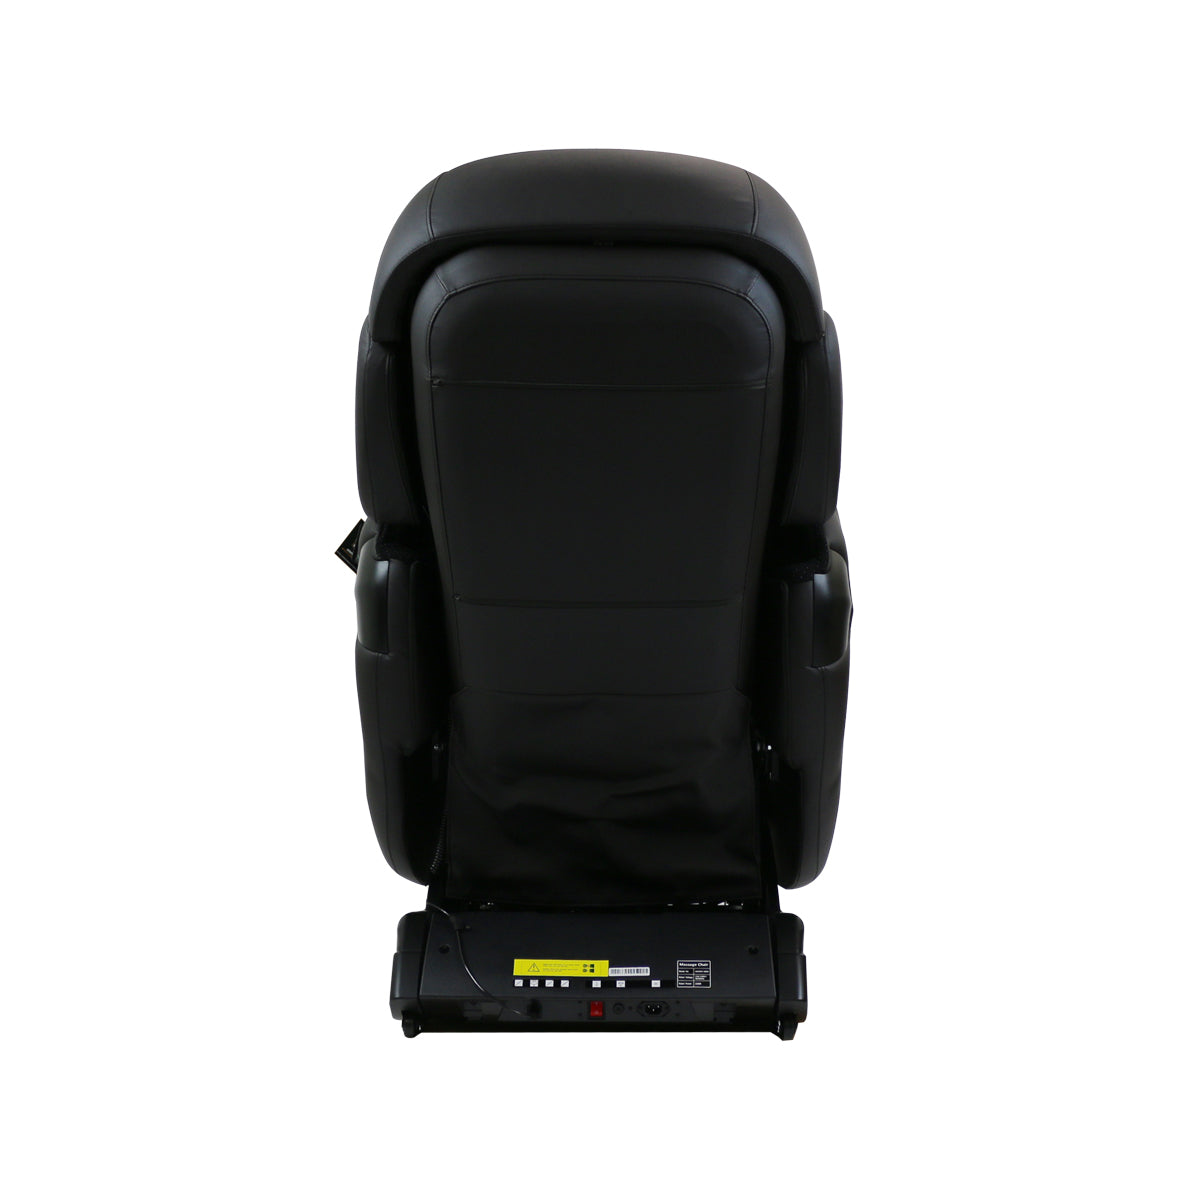 Kahuna LM6800S ARMY Series Massage Chair